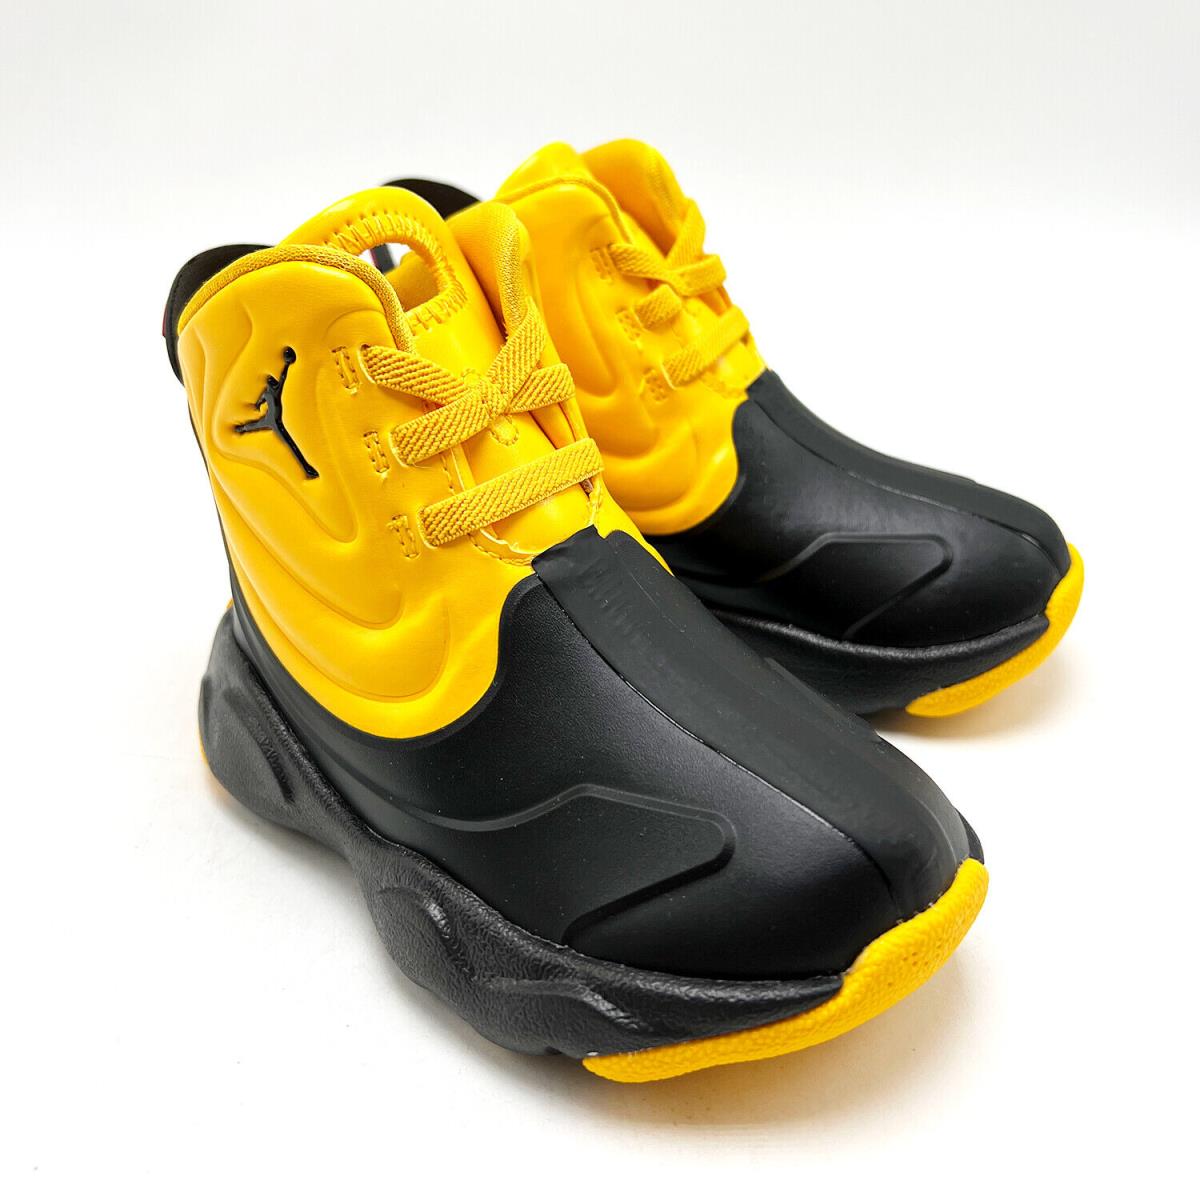 Toddler Nike Air Jordan Drip 23 Rain Boot TD Shoes CT5799 706 SZ 5.0TD - 10.0TD